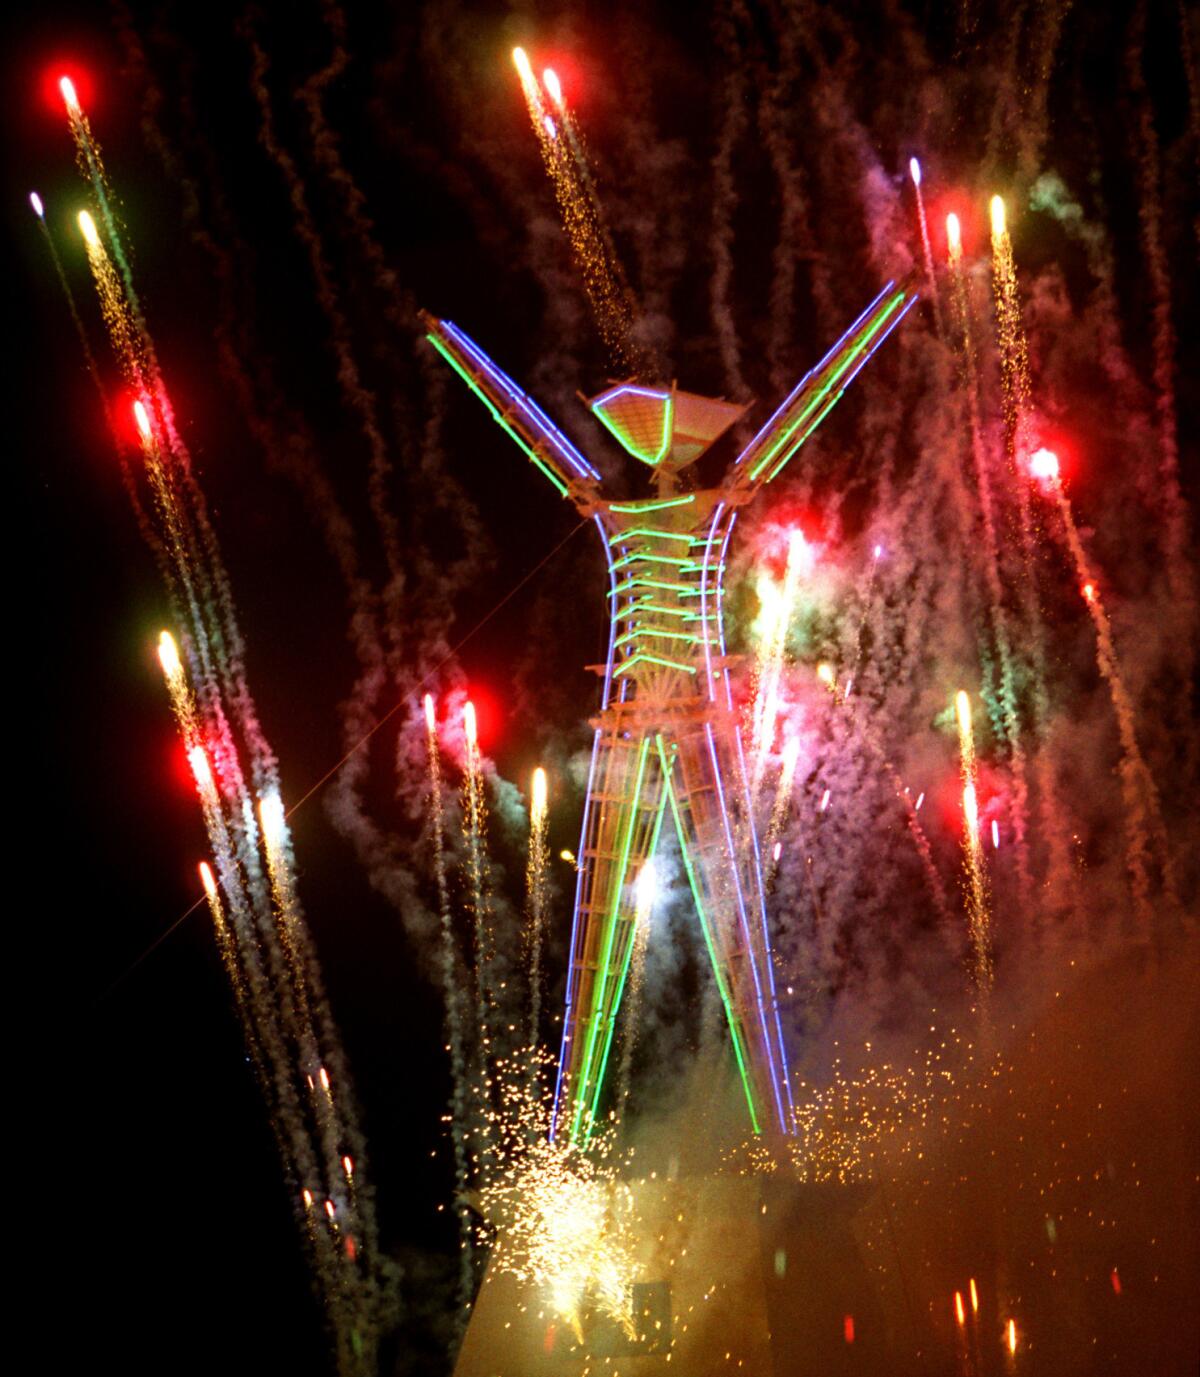 Fireworks explode at the effigy of a man at -- what else? -- the Burning Man Festival held each summer in Nevada's desert.